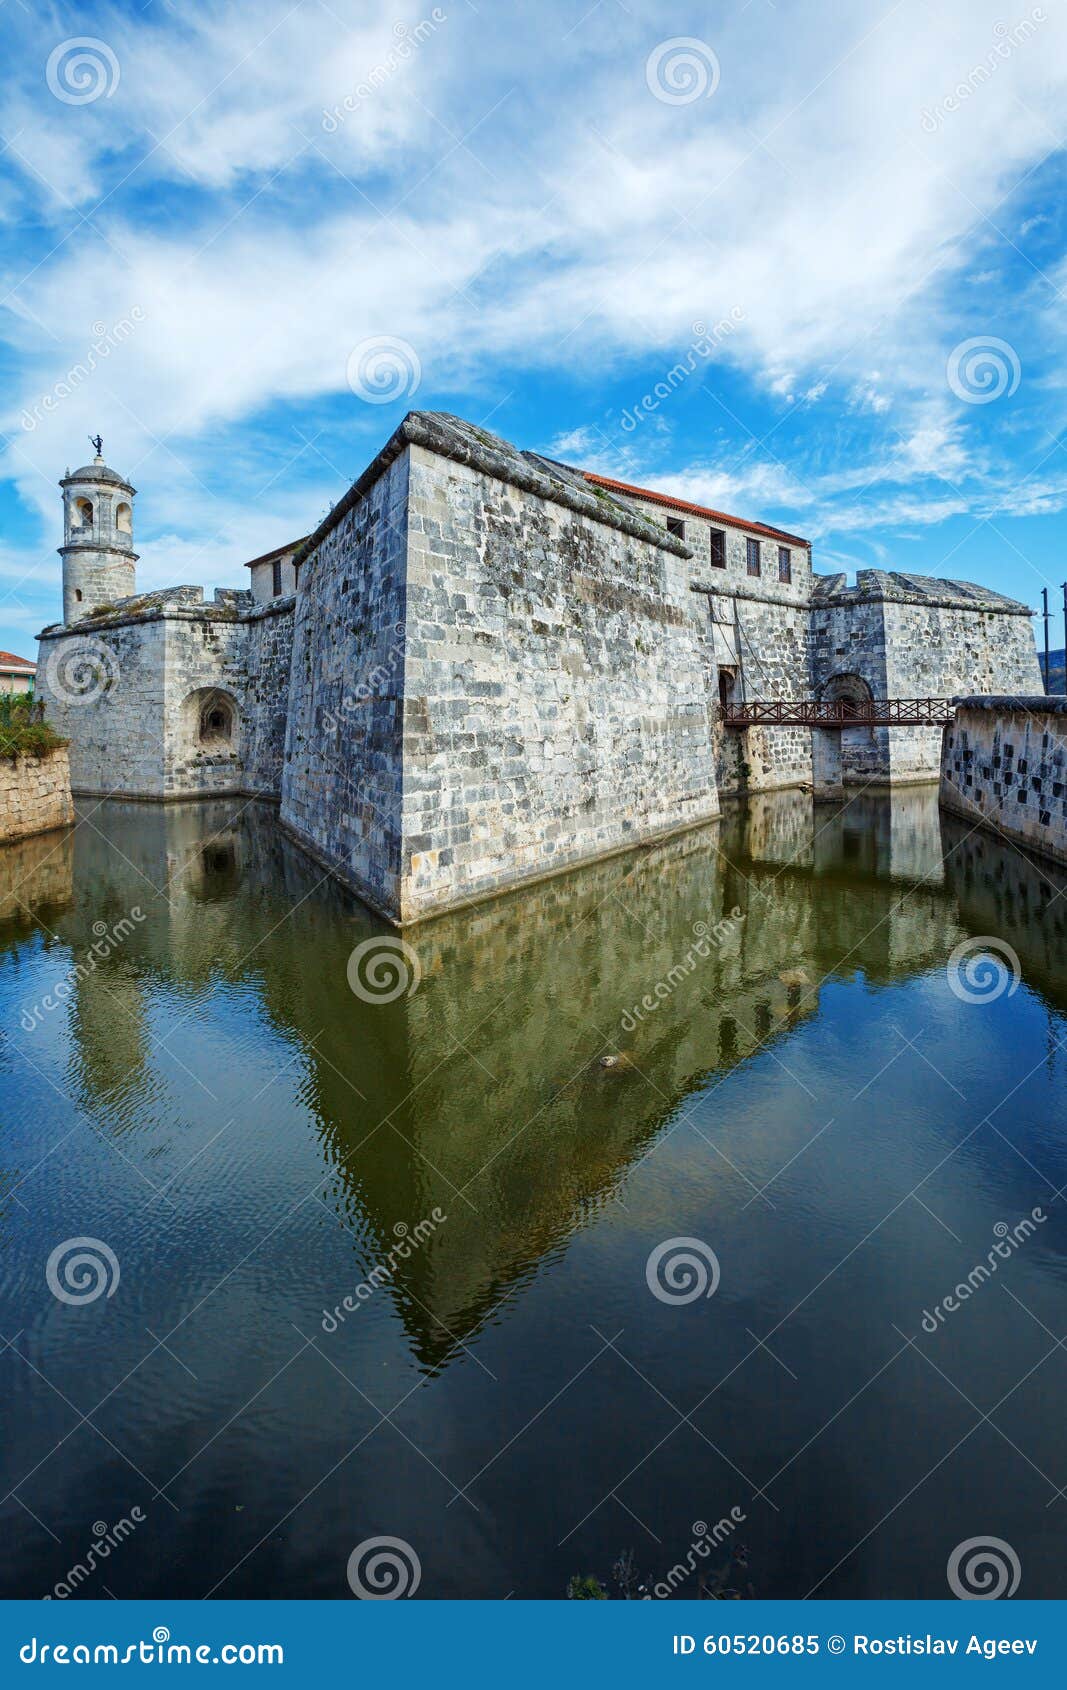 castle of the royal force (castillo de la real fuerza), fortress